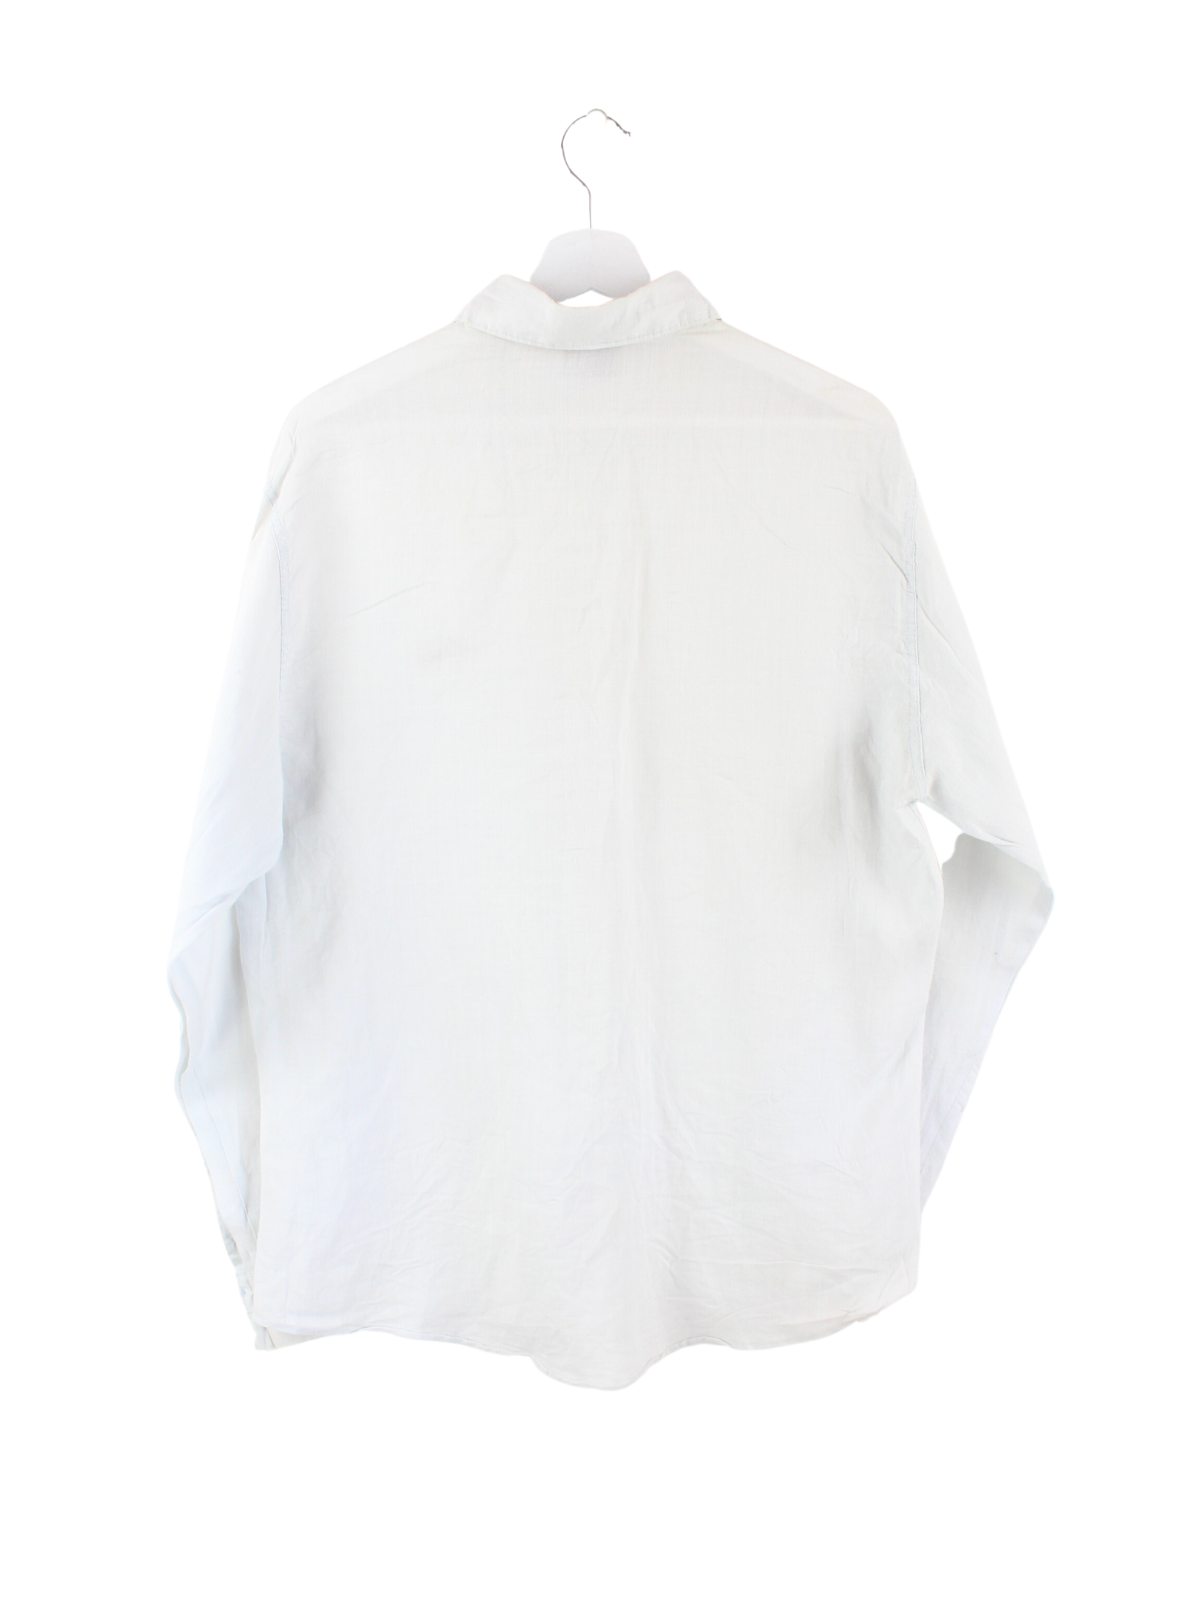 Levi's Casual Shirt White L